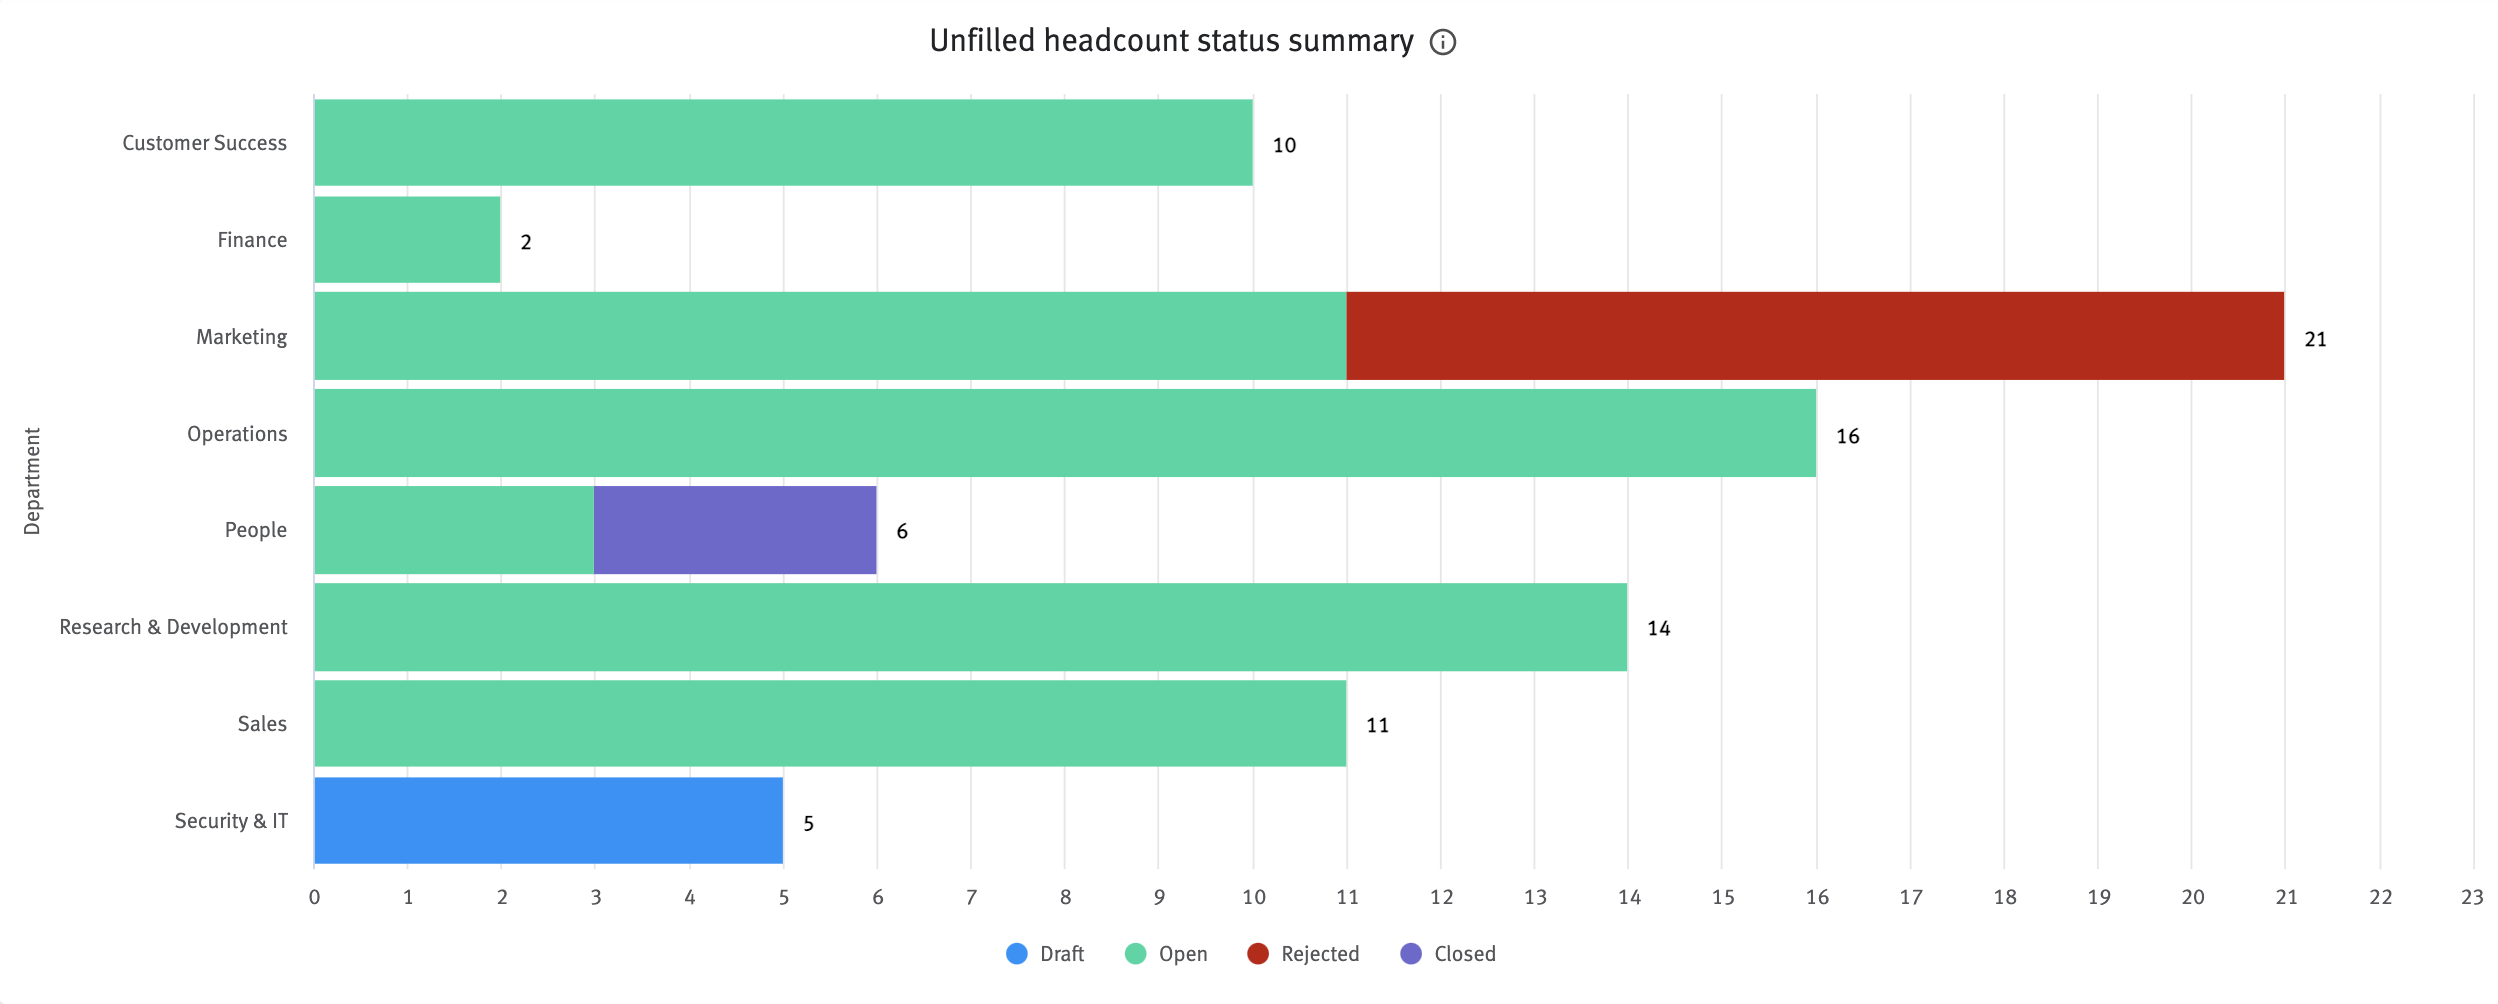 Unfilled headcount status summary chart